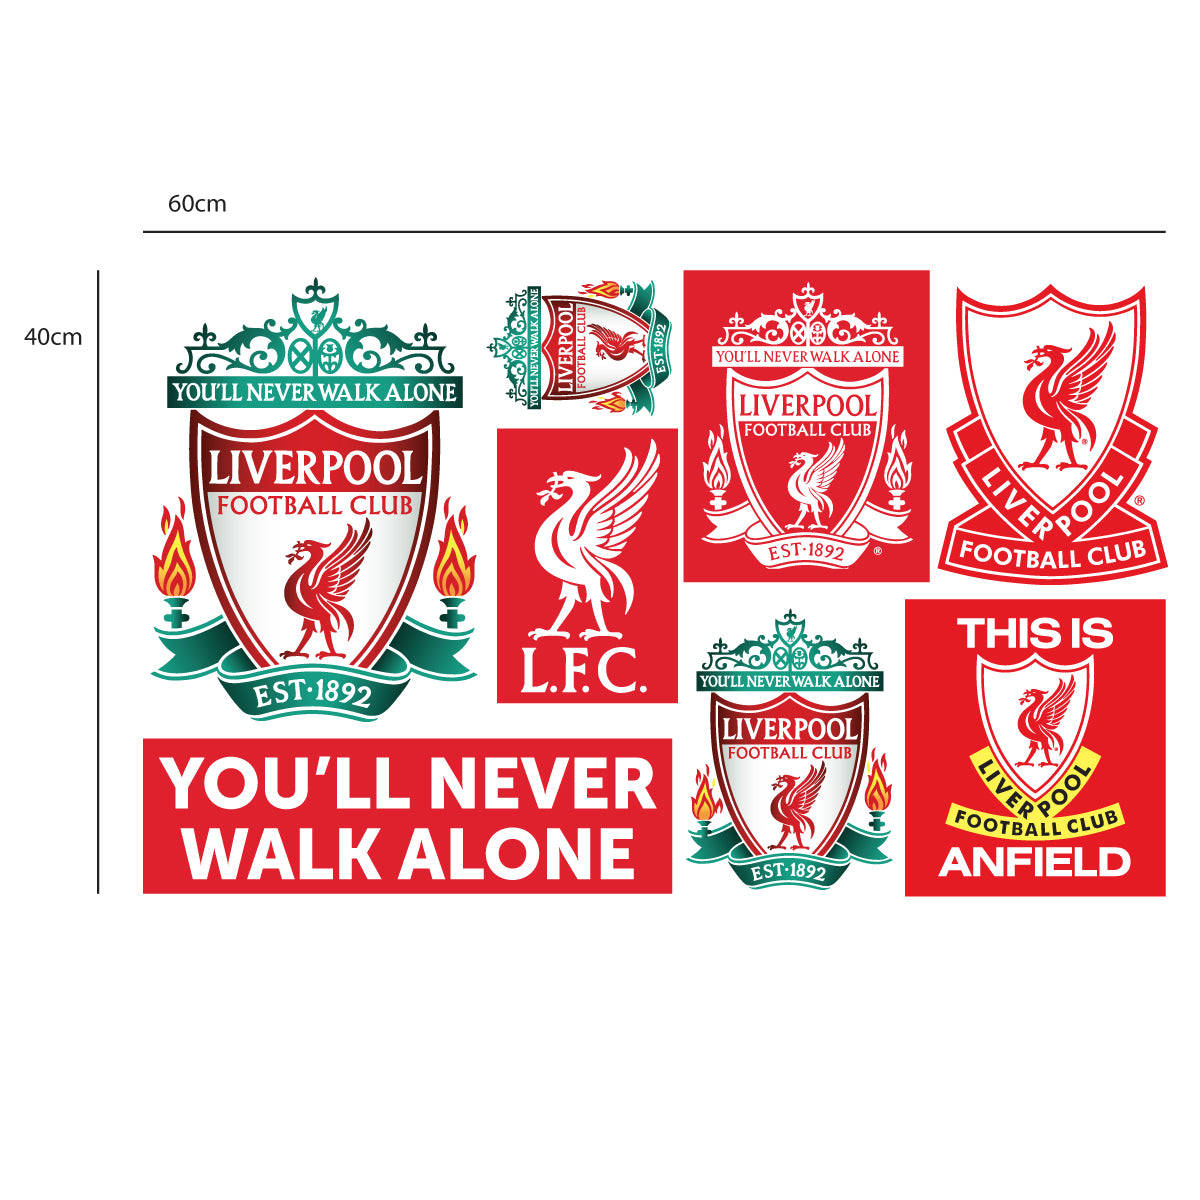 Liverpool Football Club - Anfield Stadium (The Mainstand) Wall Mural + LFC Wall Sticker Set